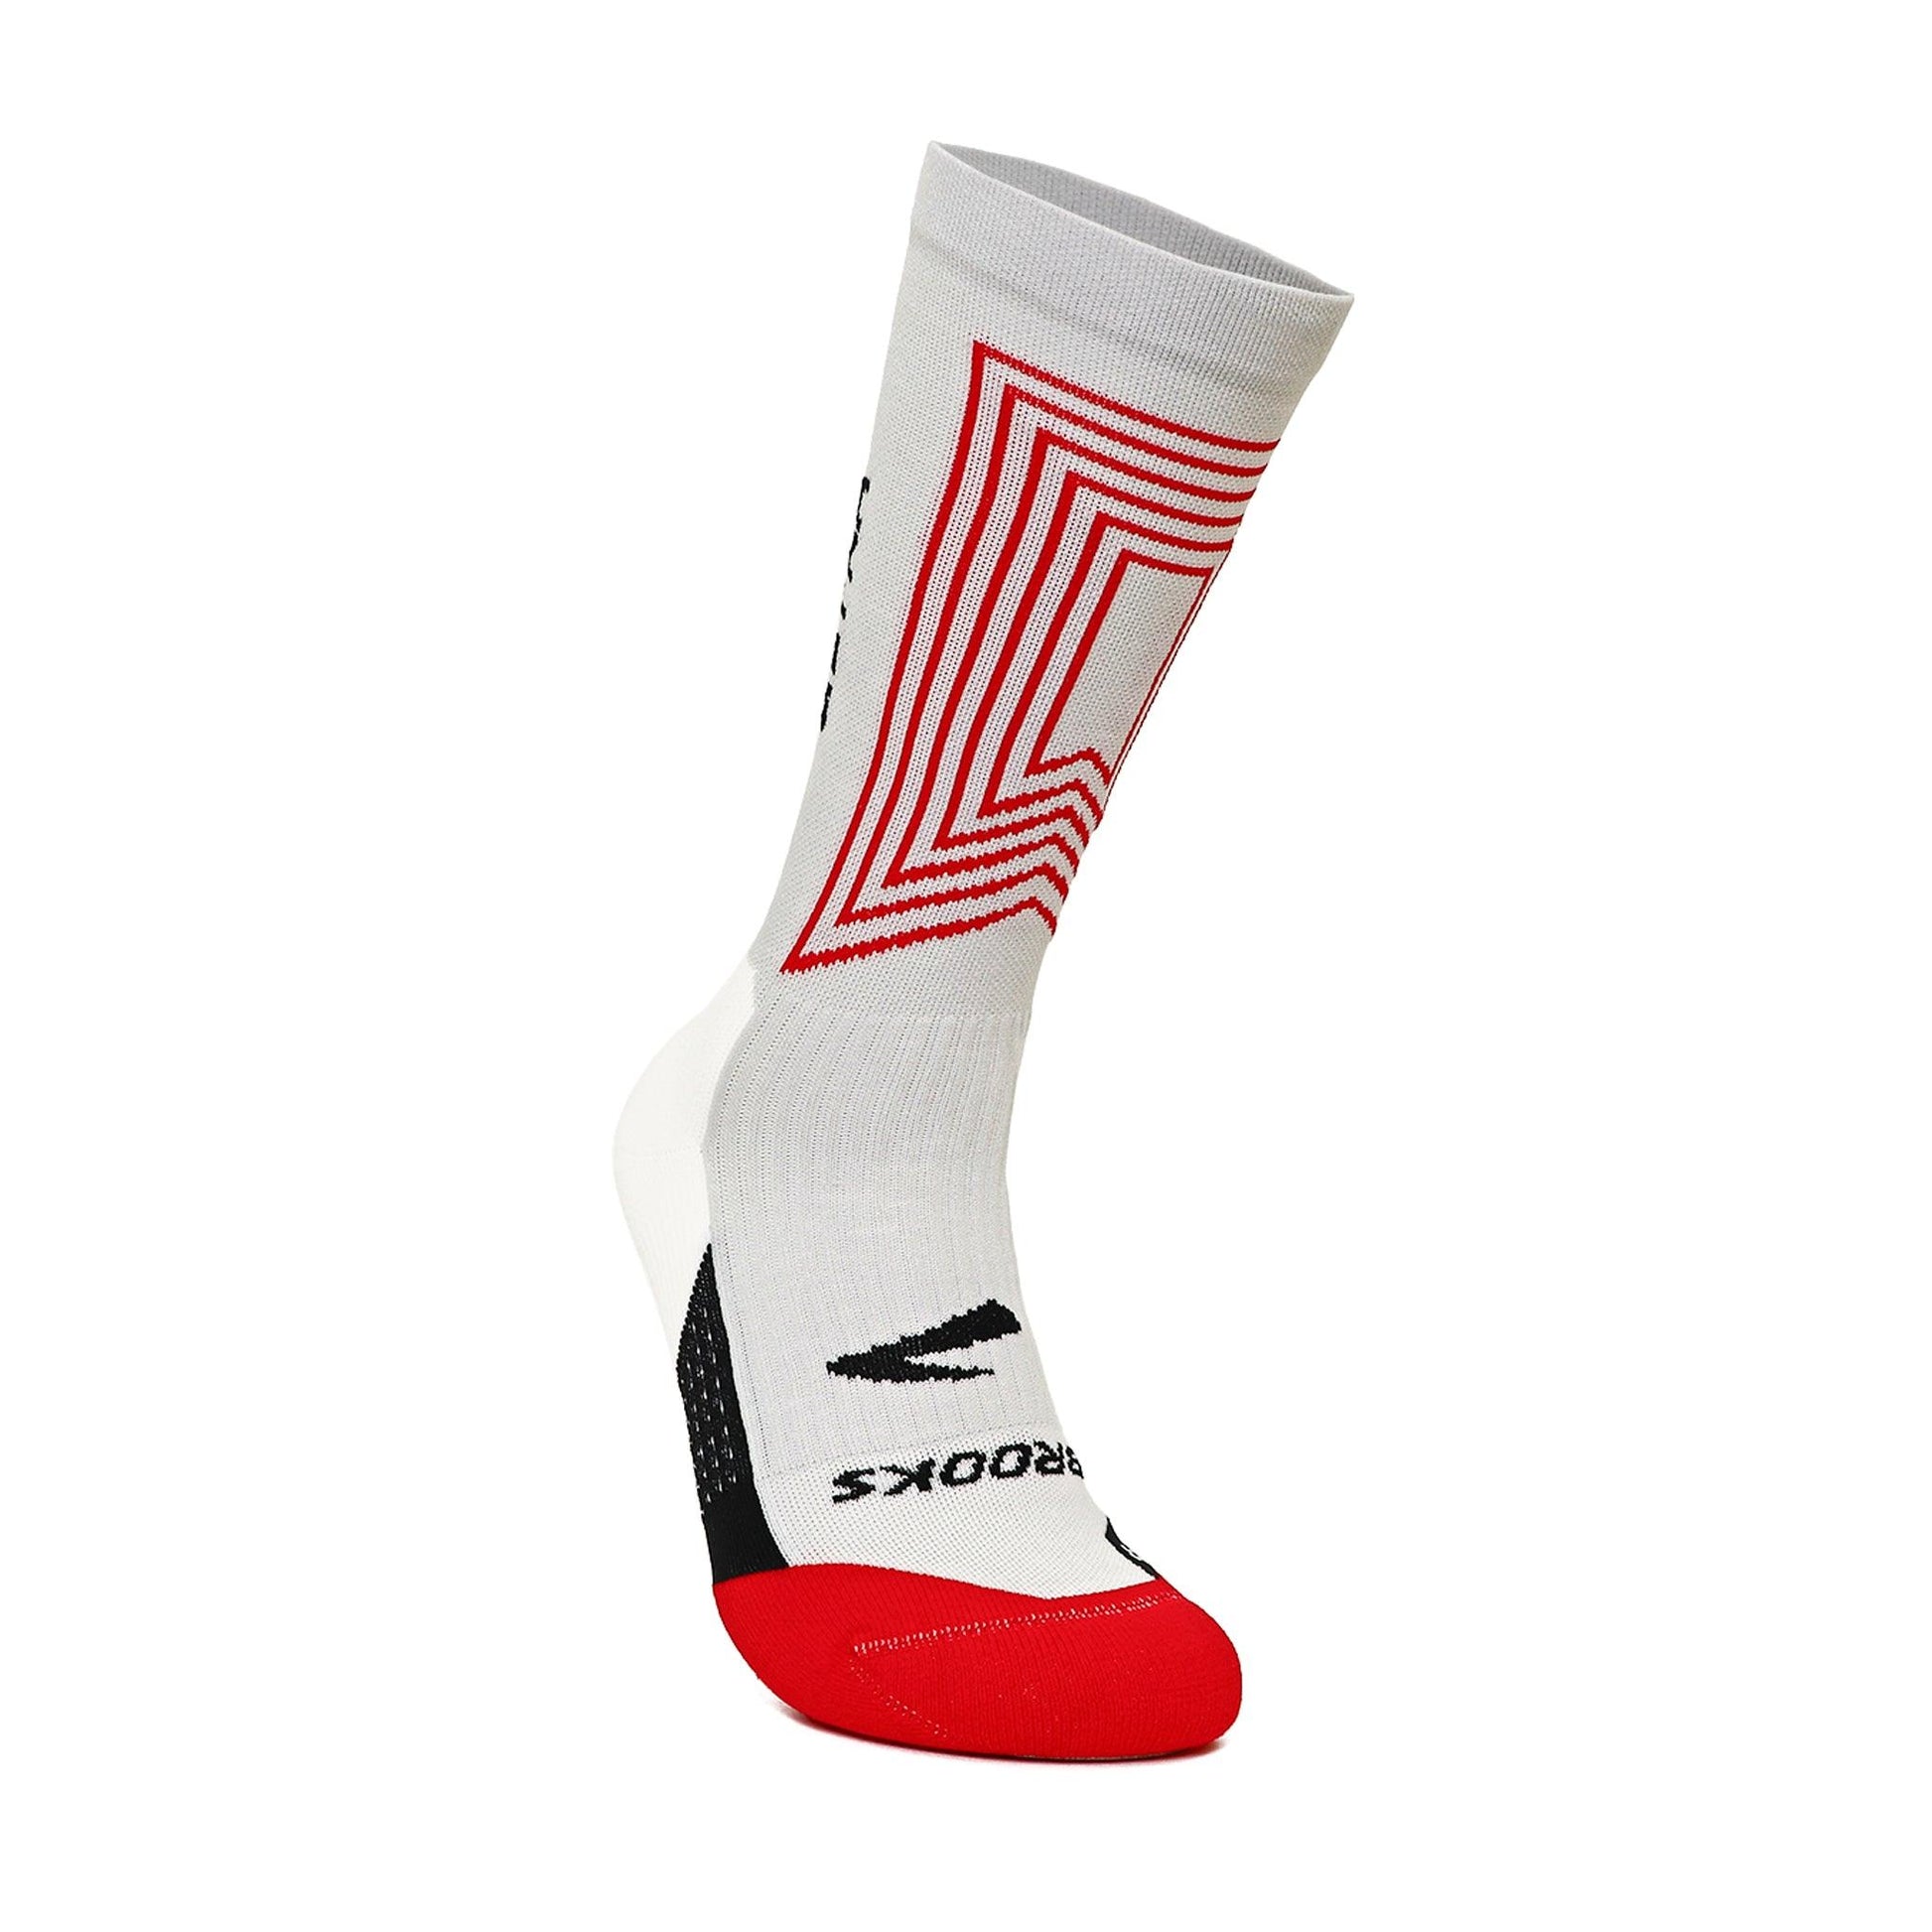    michelob-ultra-brooks-running-and-training-socks